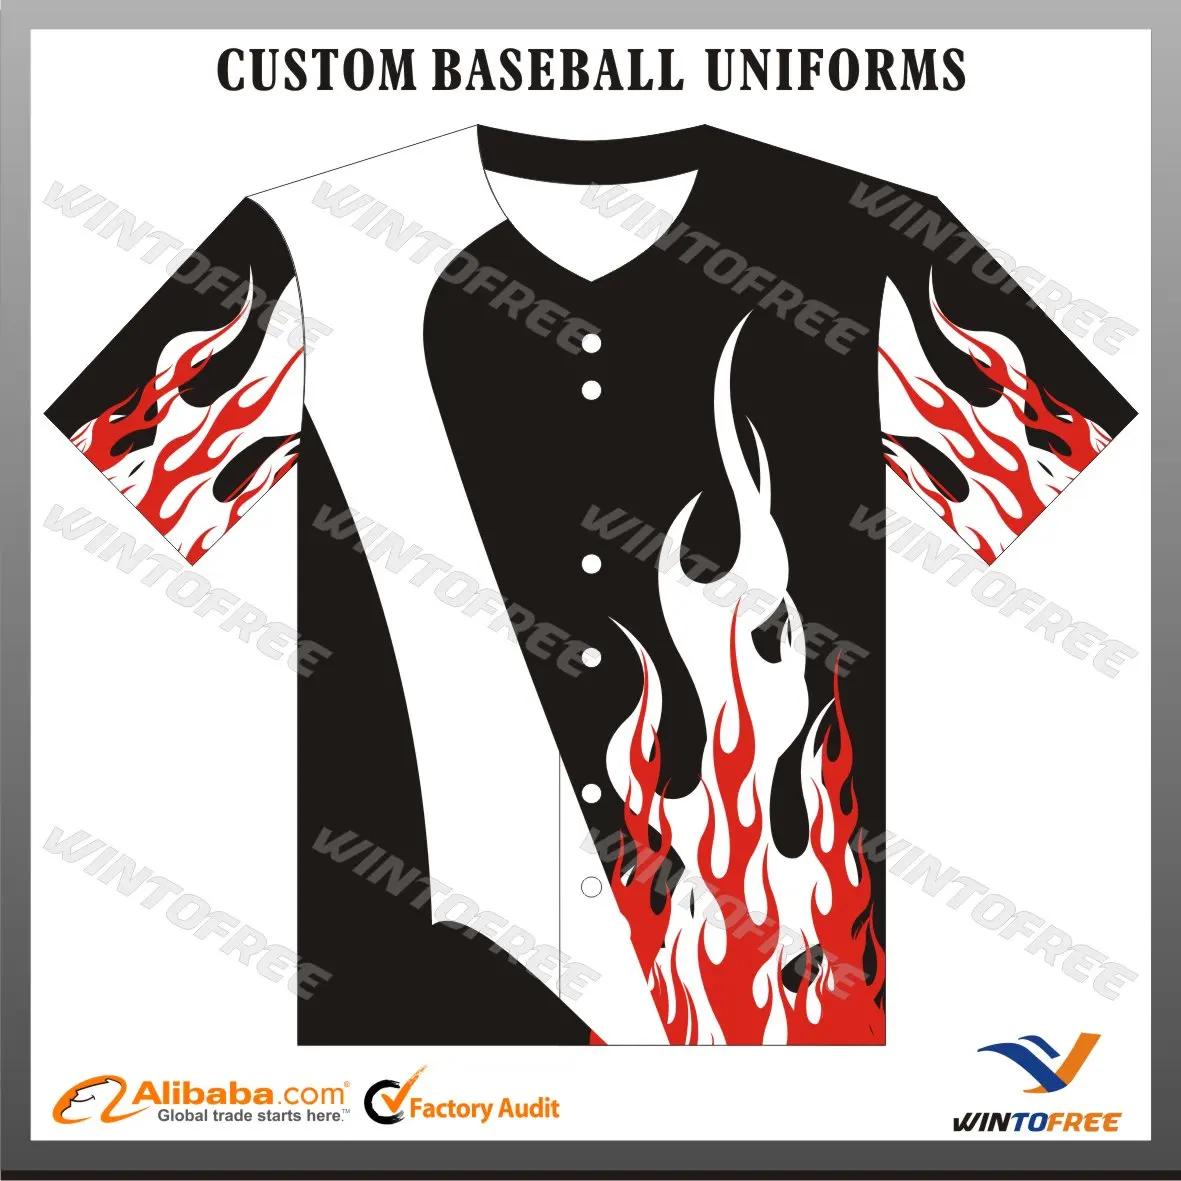 Baseball Uniform Suppliers 80